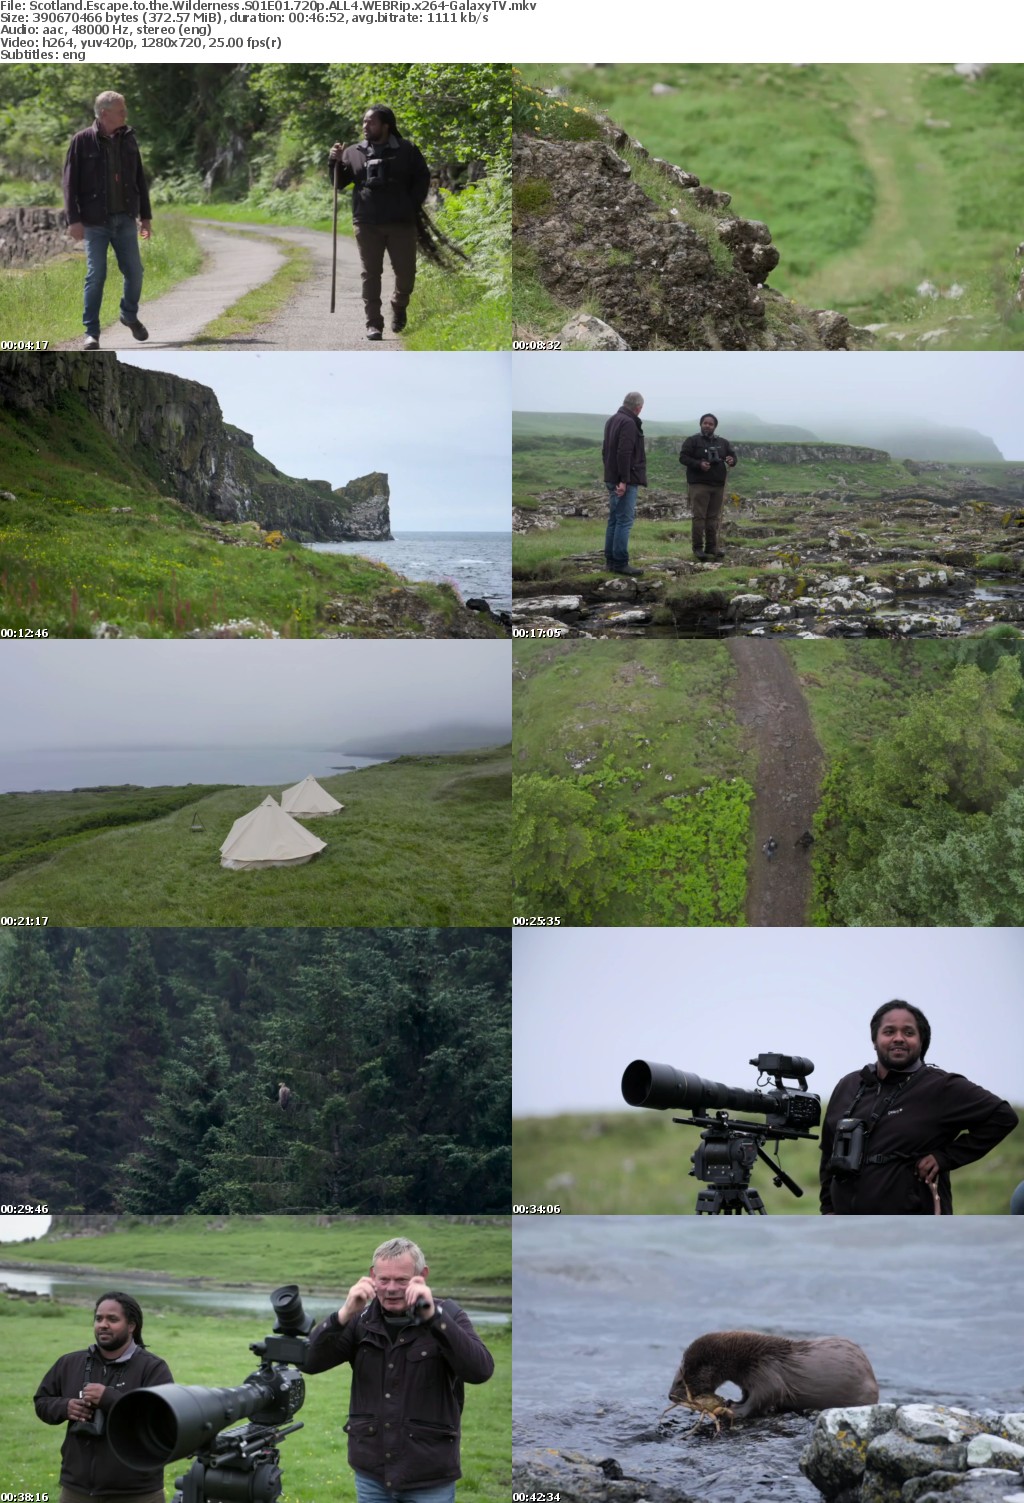 Scotland Escape to the Wilderness S01 COMPLETE 720p ALL4 WEBRip x264-GalaxyTV